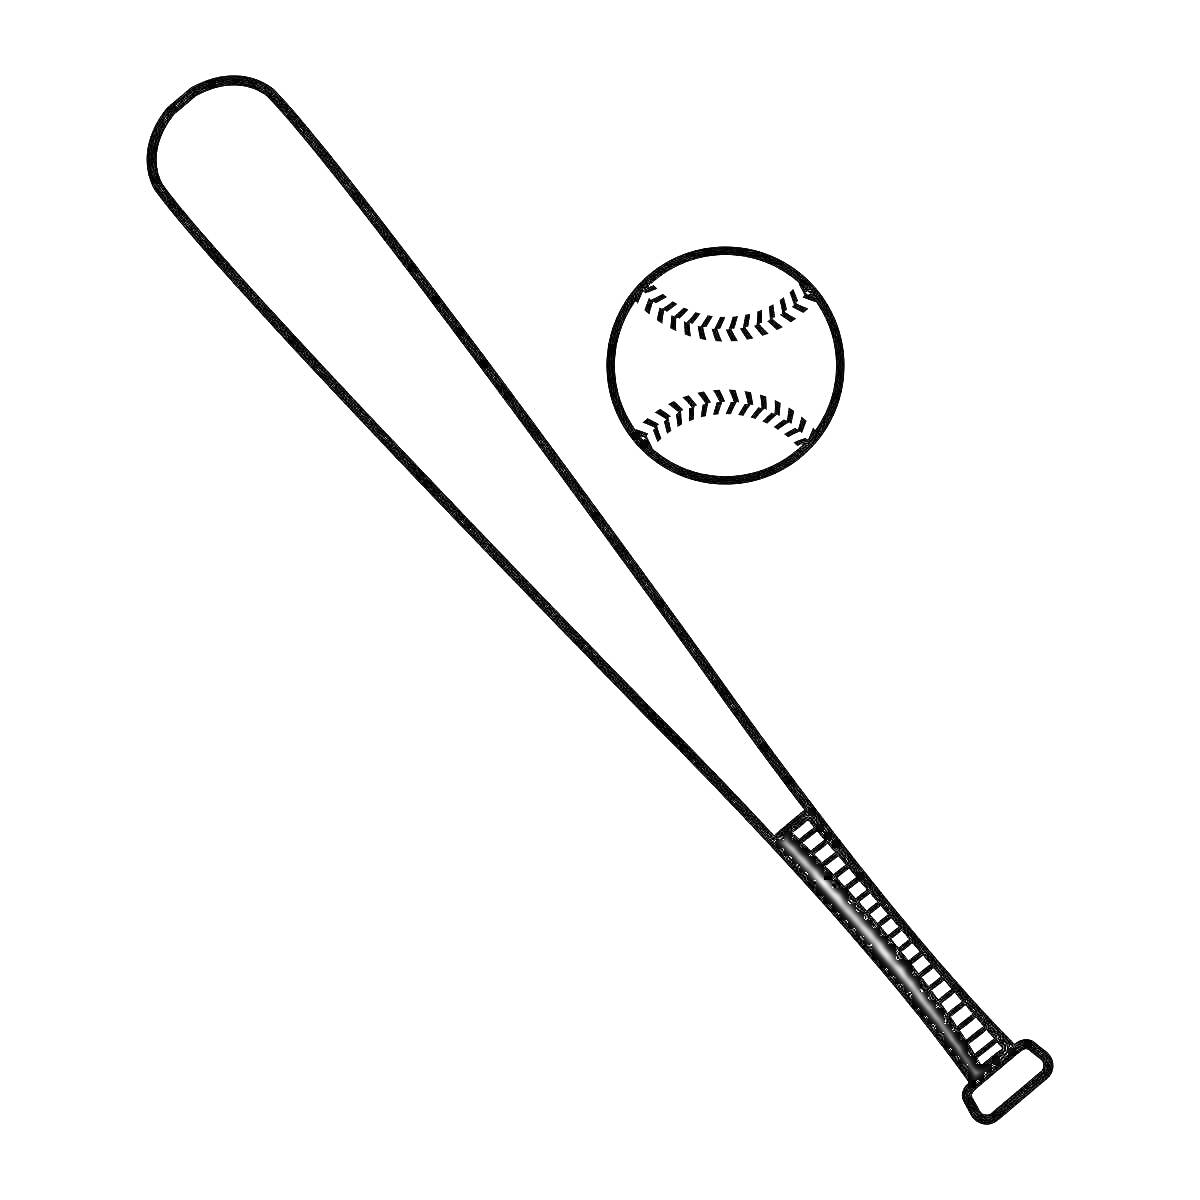 На раскраске изображено: Бейсбол, Бита, Спортивное оборудование, Спорт, Бейсбольная бита, Бейсбольный мяч